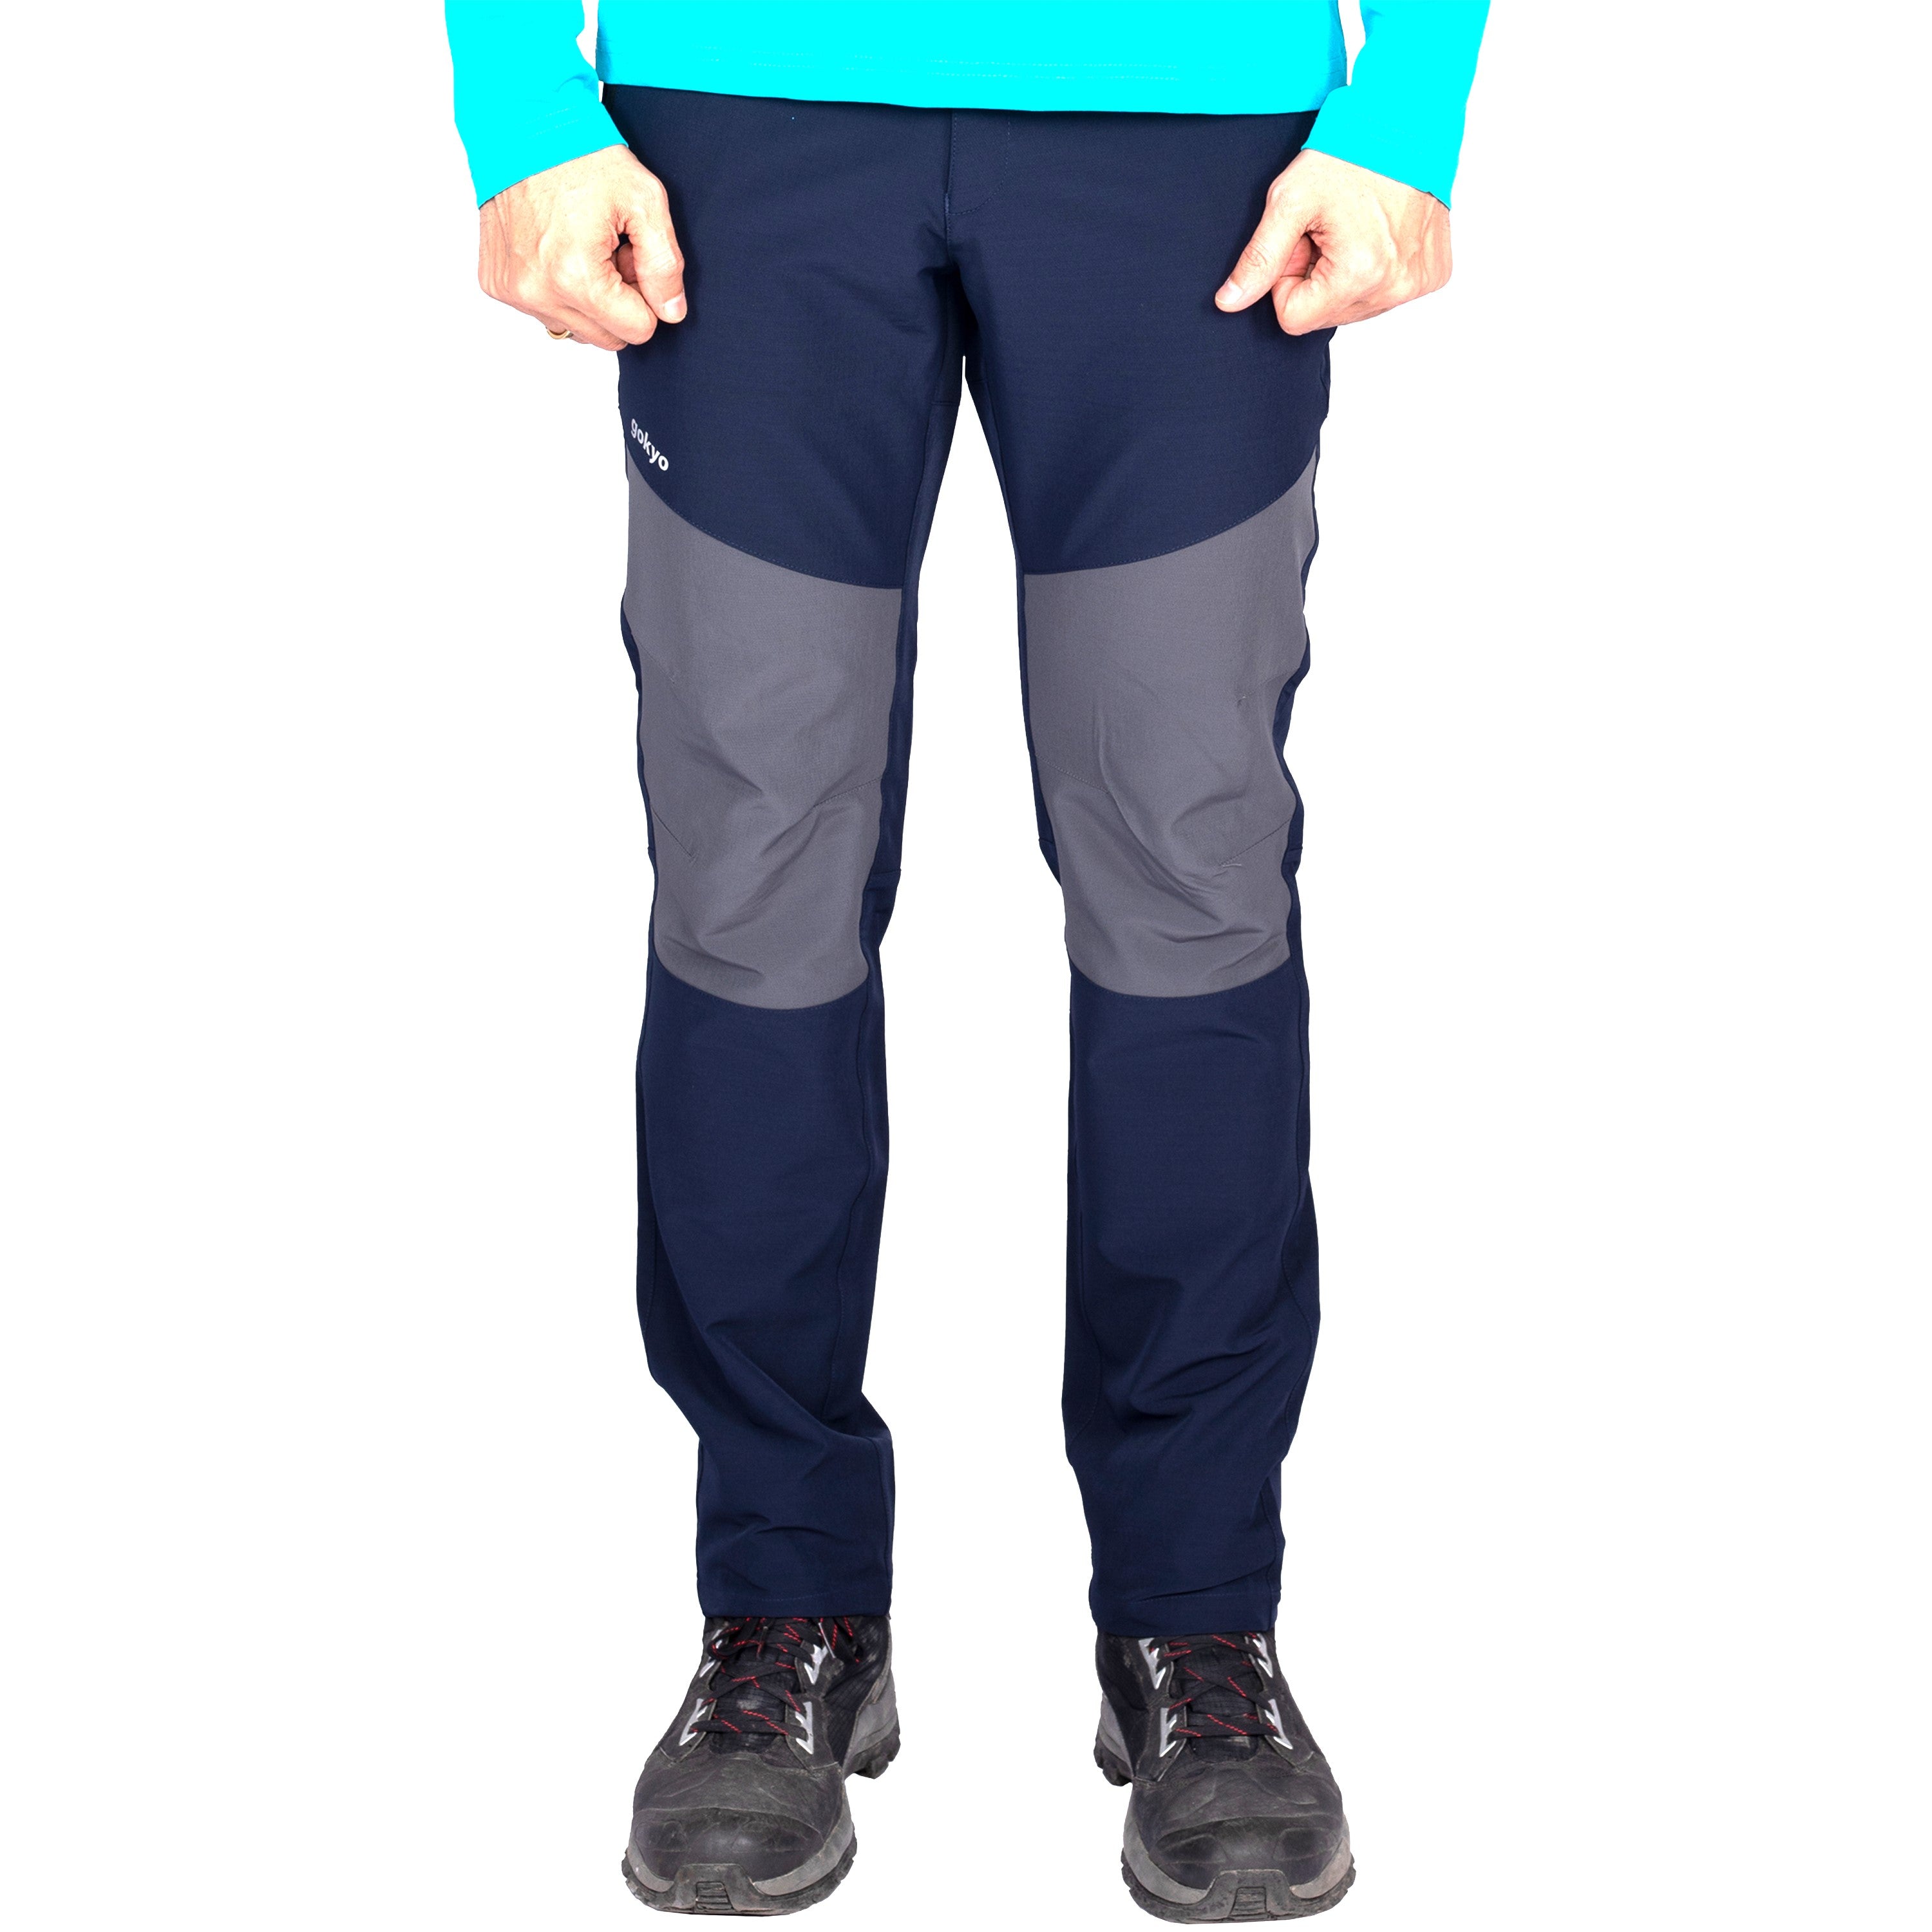 Buy Kaza All Weather Trekking Pants Navy at Gokyo Outdoor Clothing & Gear